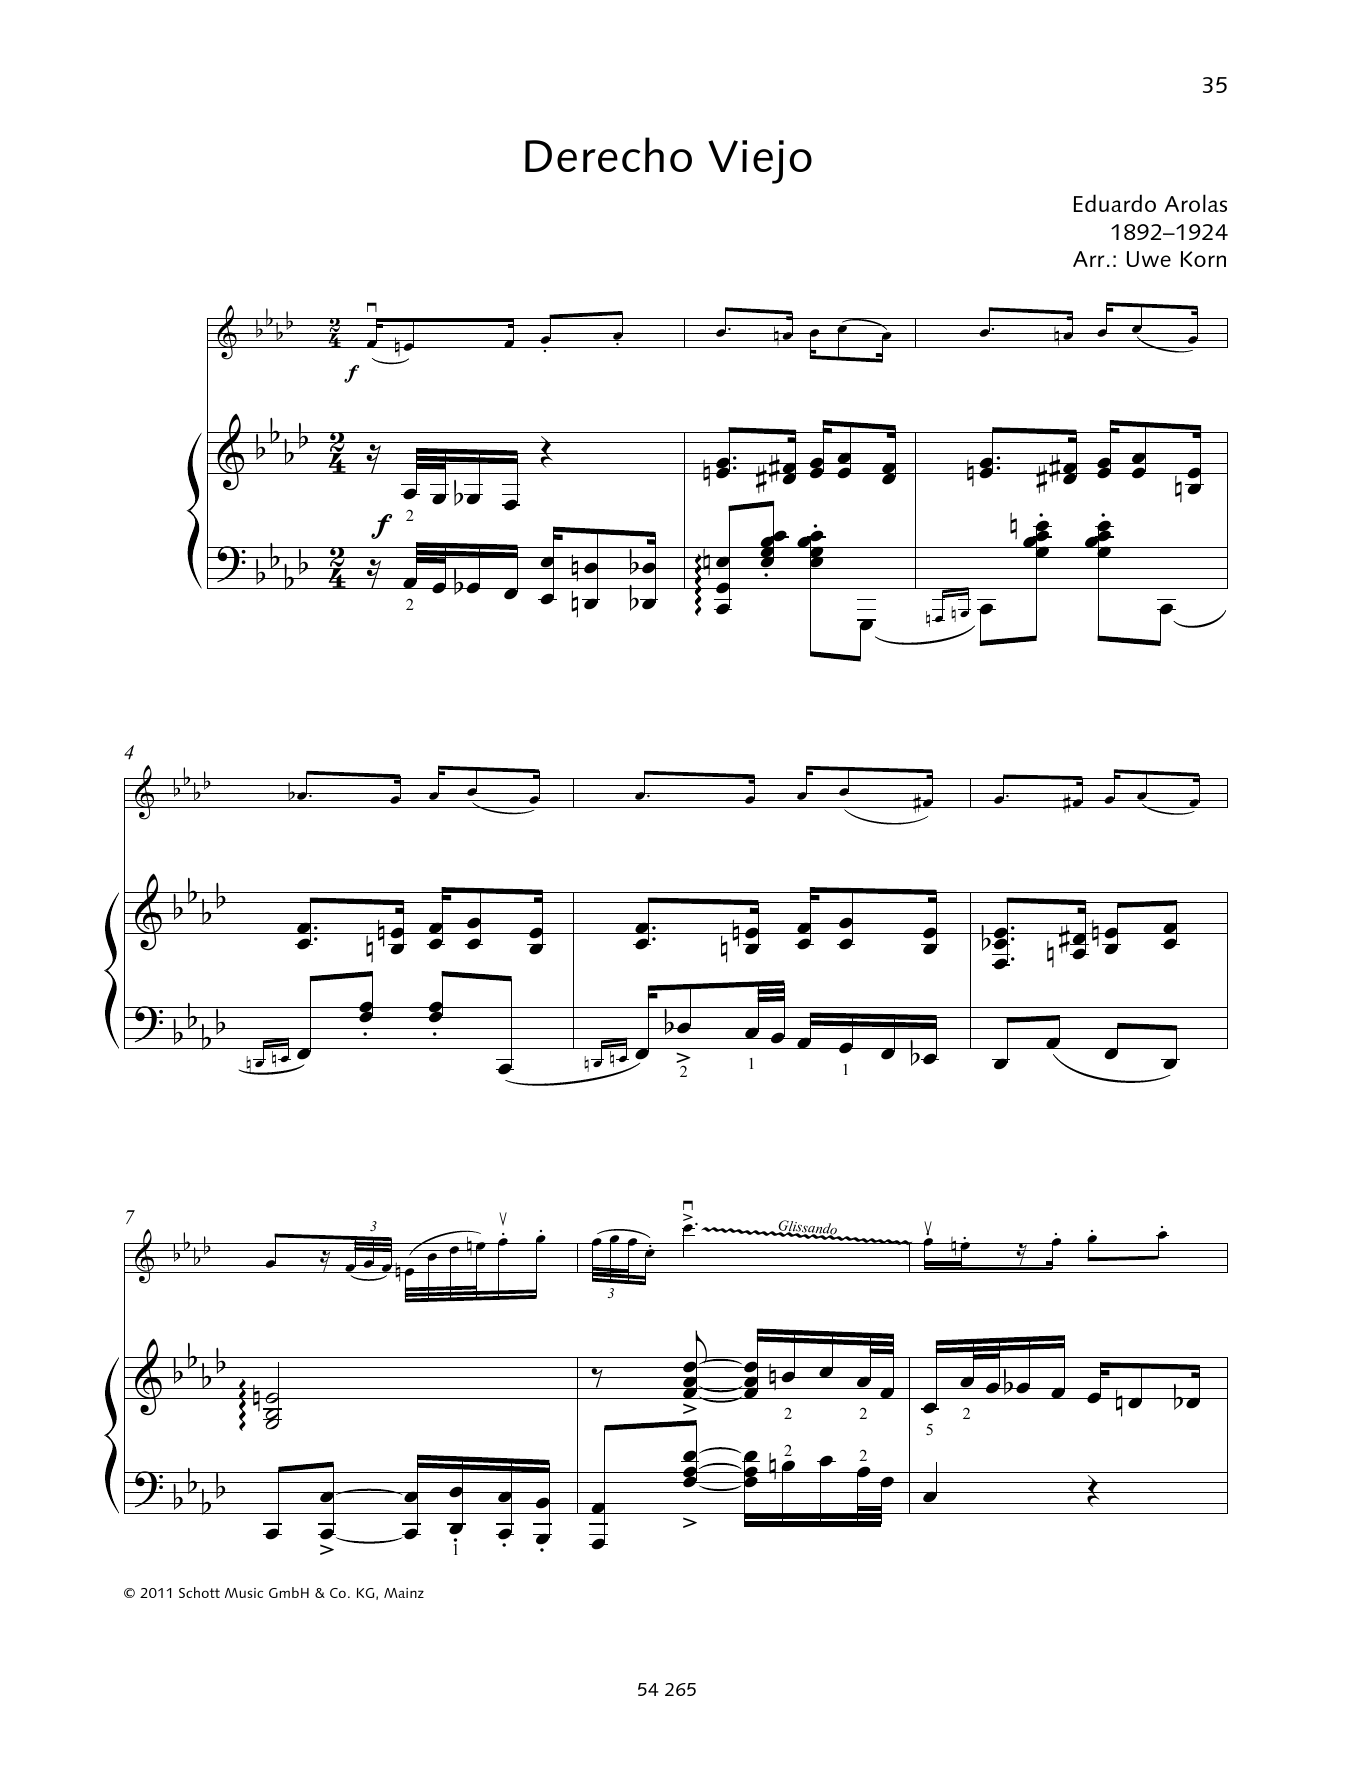 Eduardo Arolas Derecho Viejo Sheet Music Notes & Chords for String Solo - Download or Print PDF